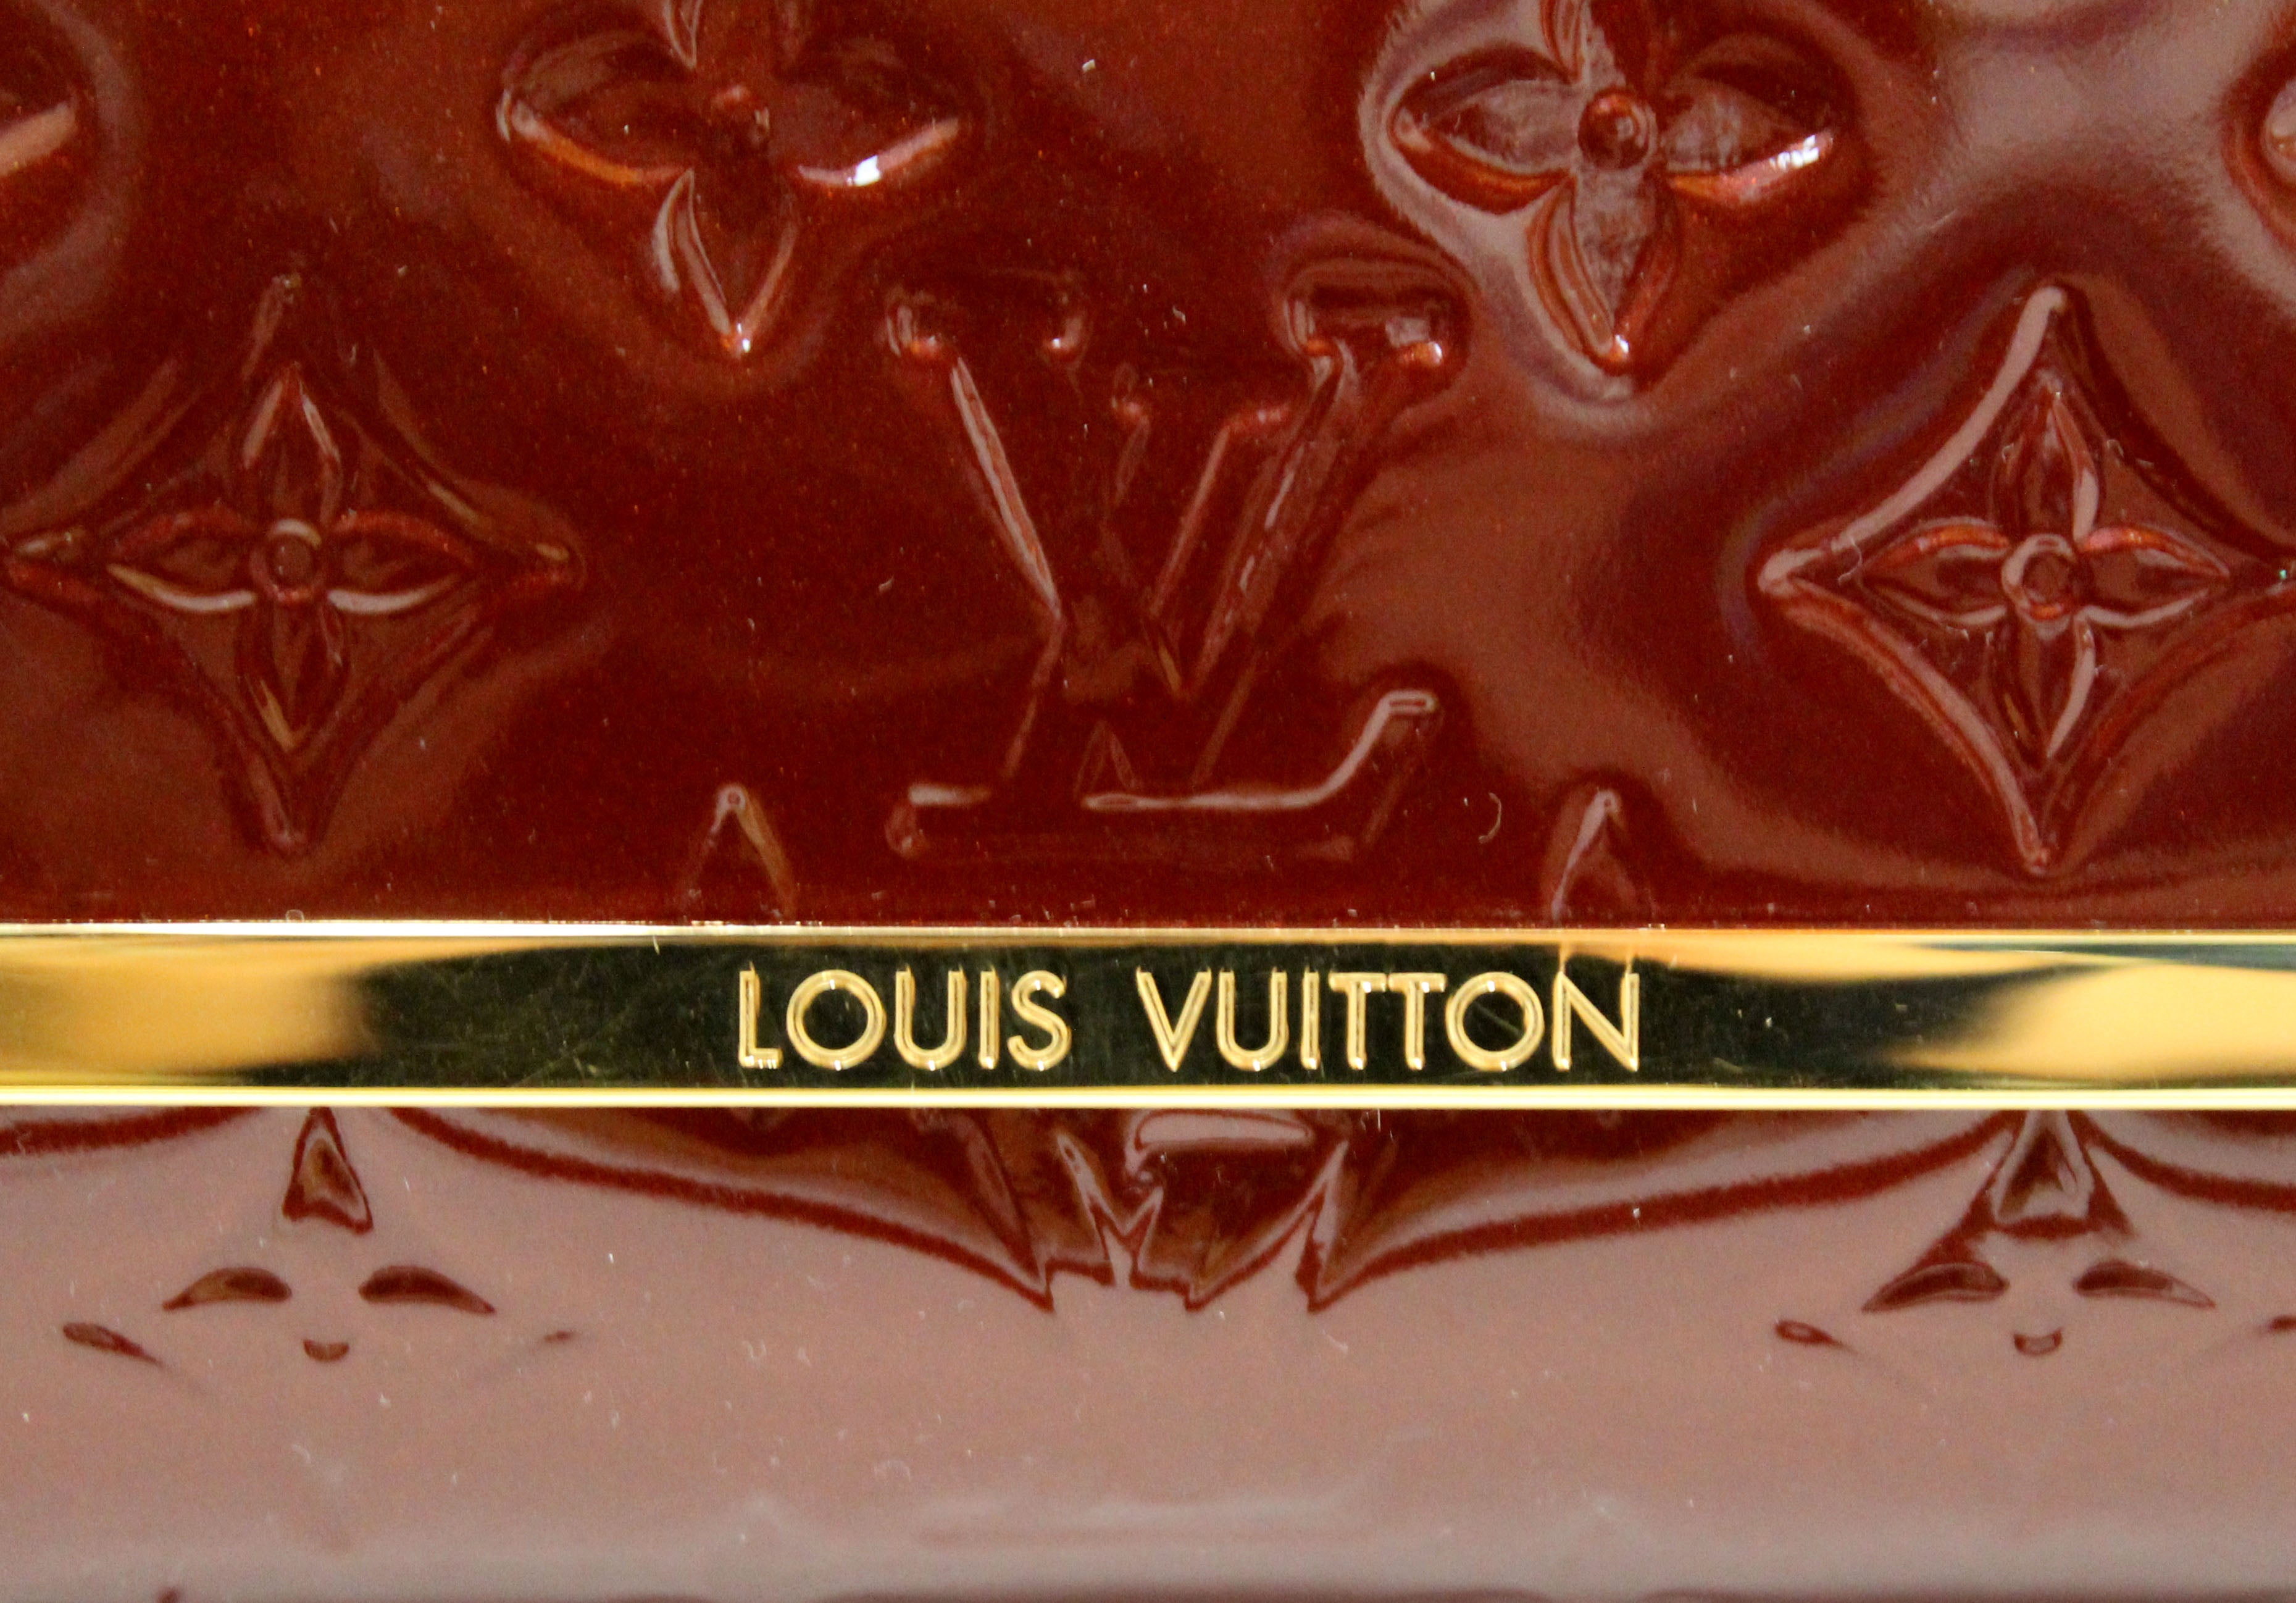 Authentic Louis Vuitton Rouge Fauviste Monogram Vernis Leather Rossmore MM Clutch